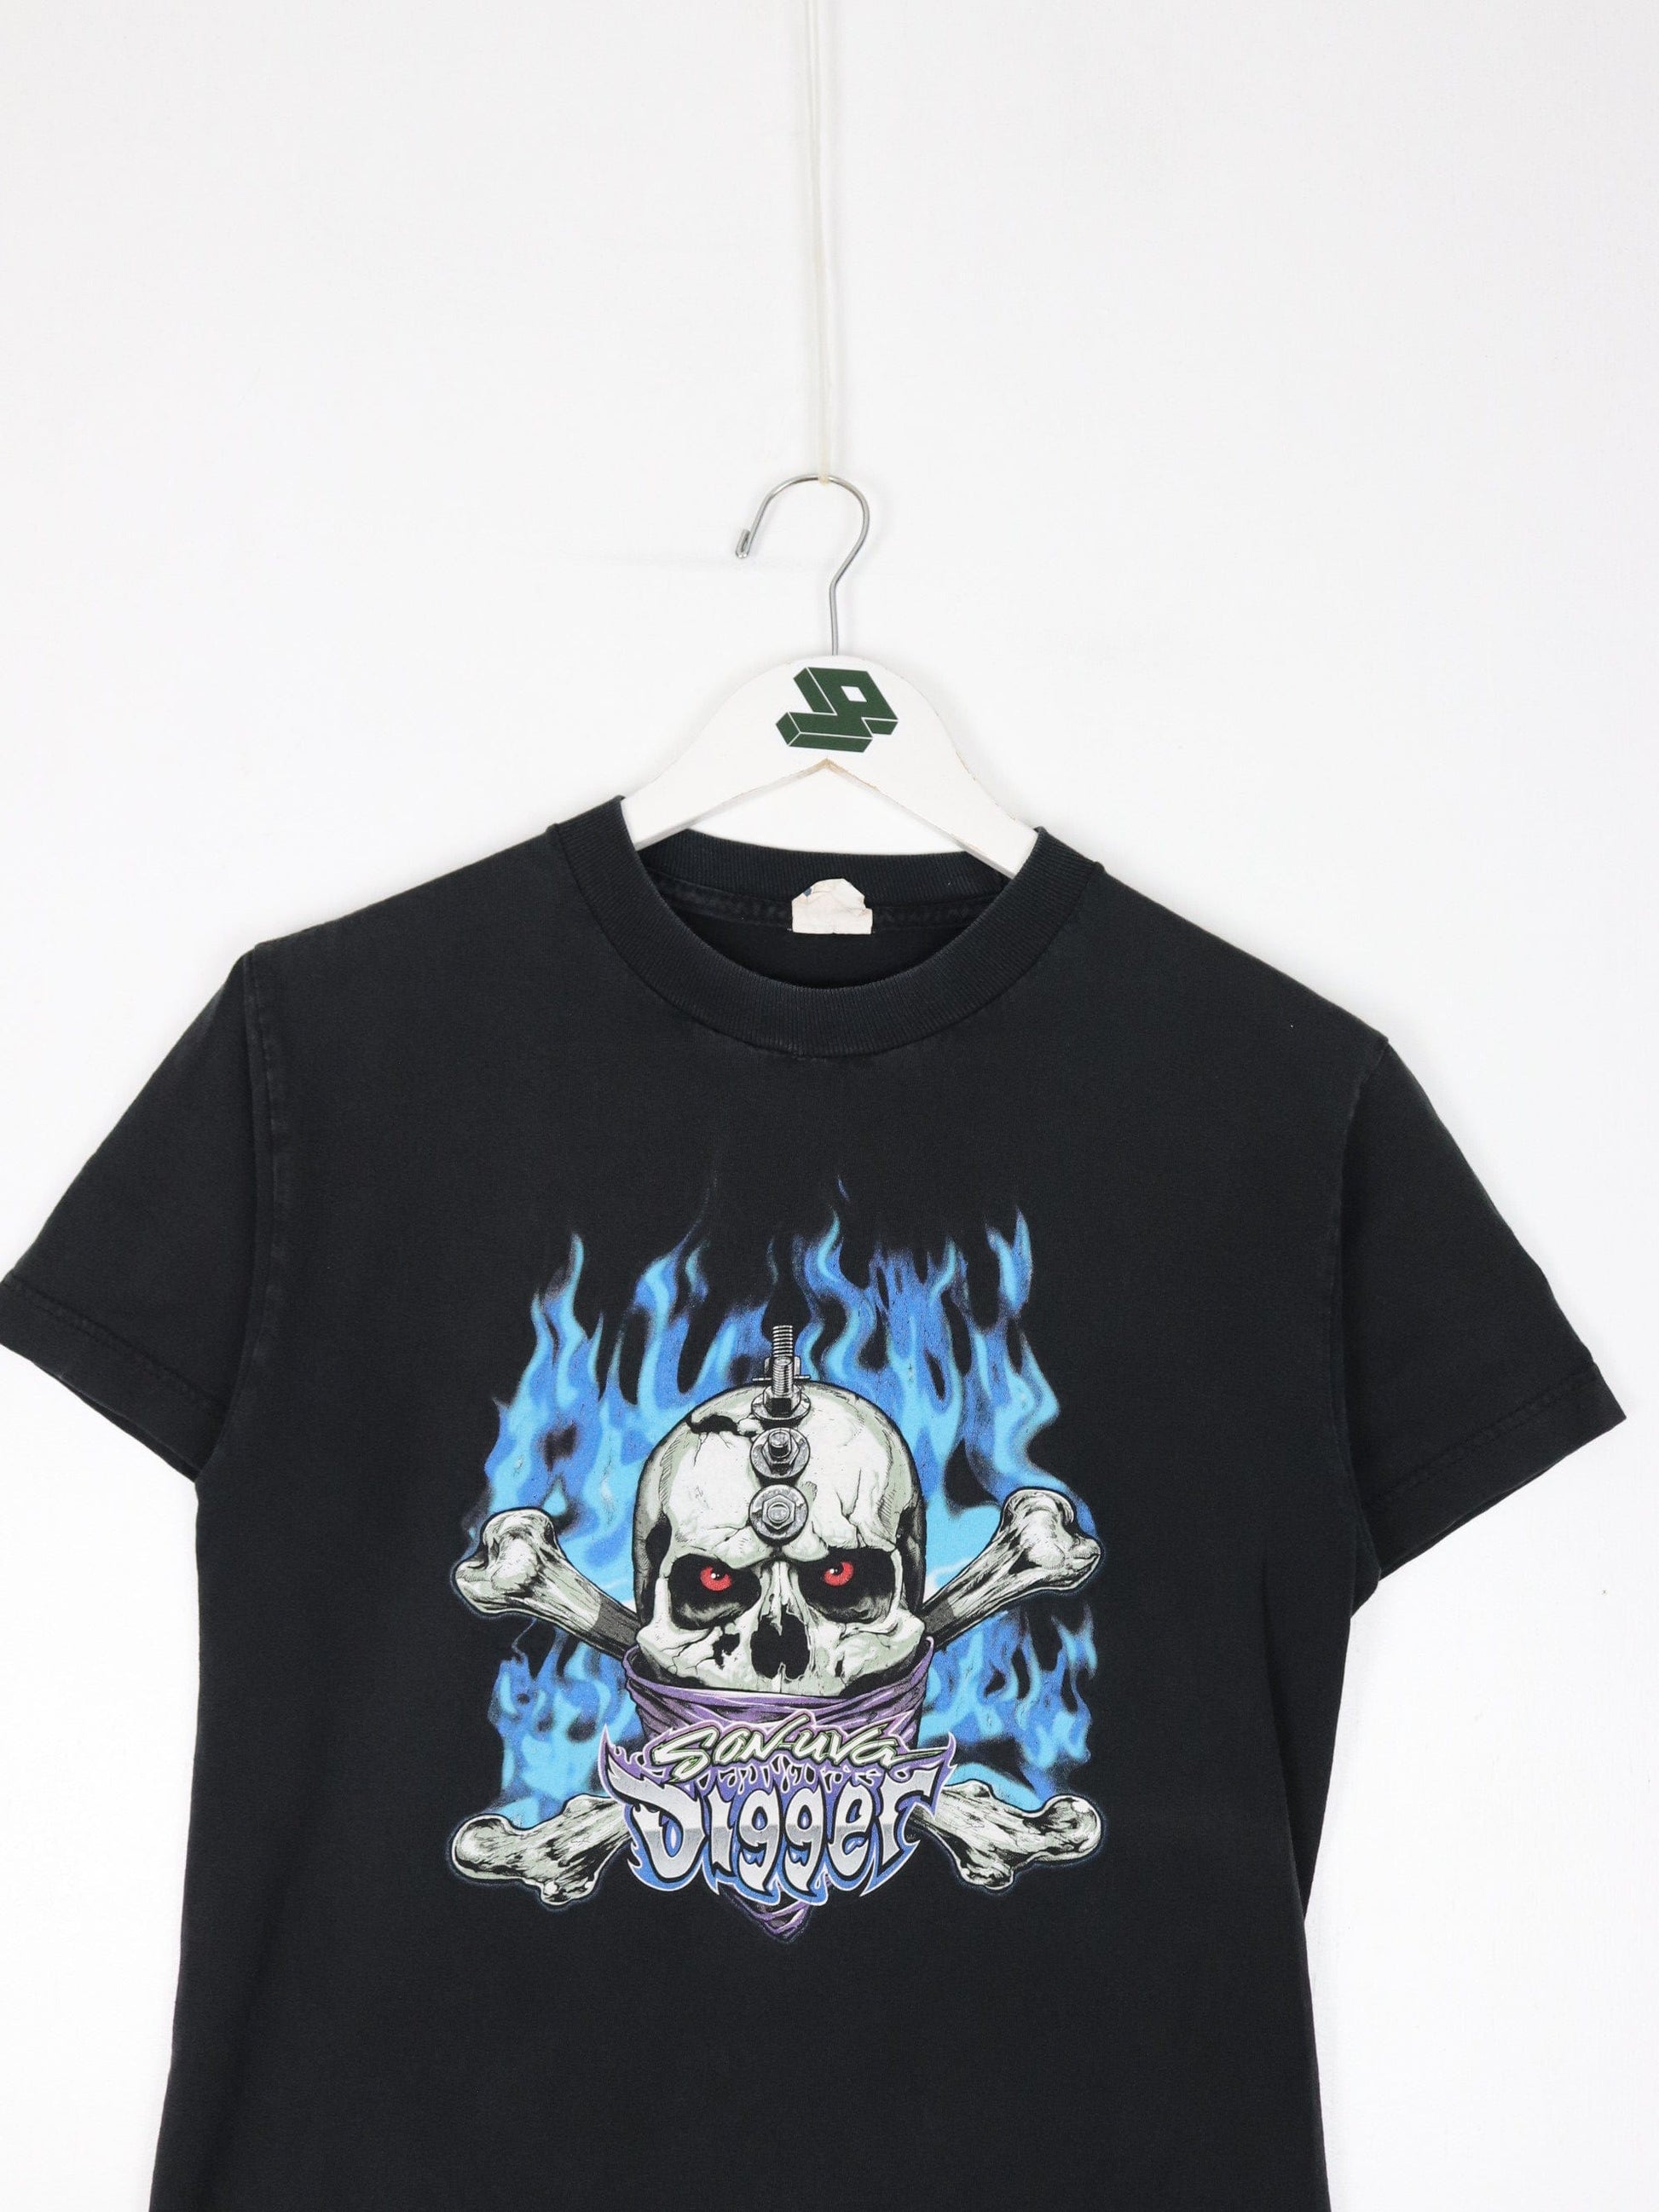 Other T-Shirts & Tank Tops Monster Truck T Shirt Youth Medium Black Son-Uva-Digger Promo